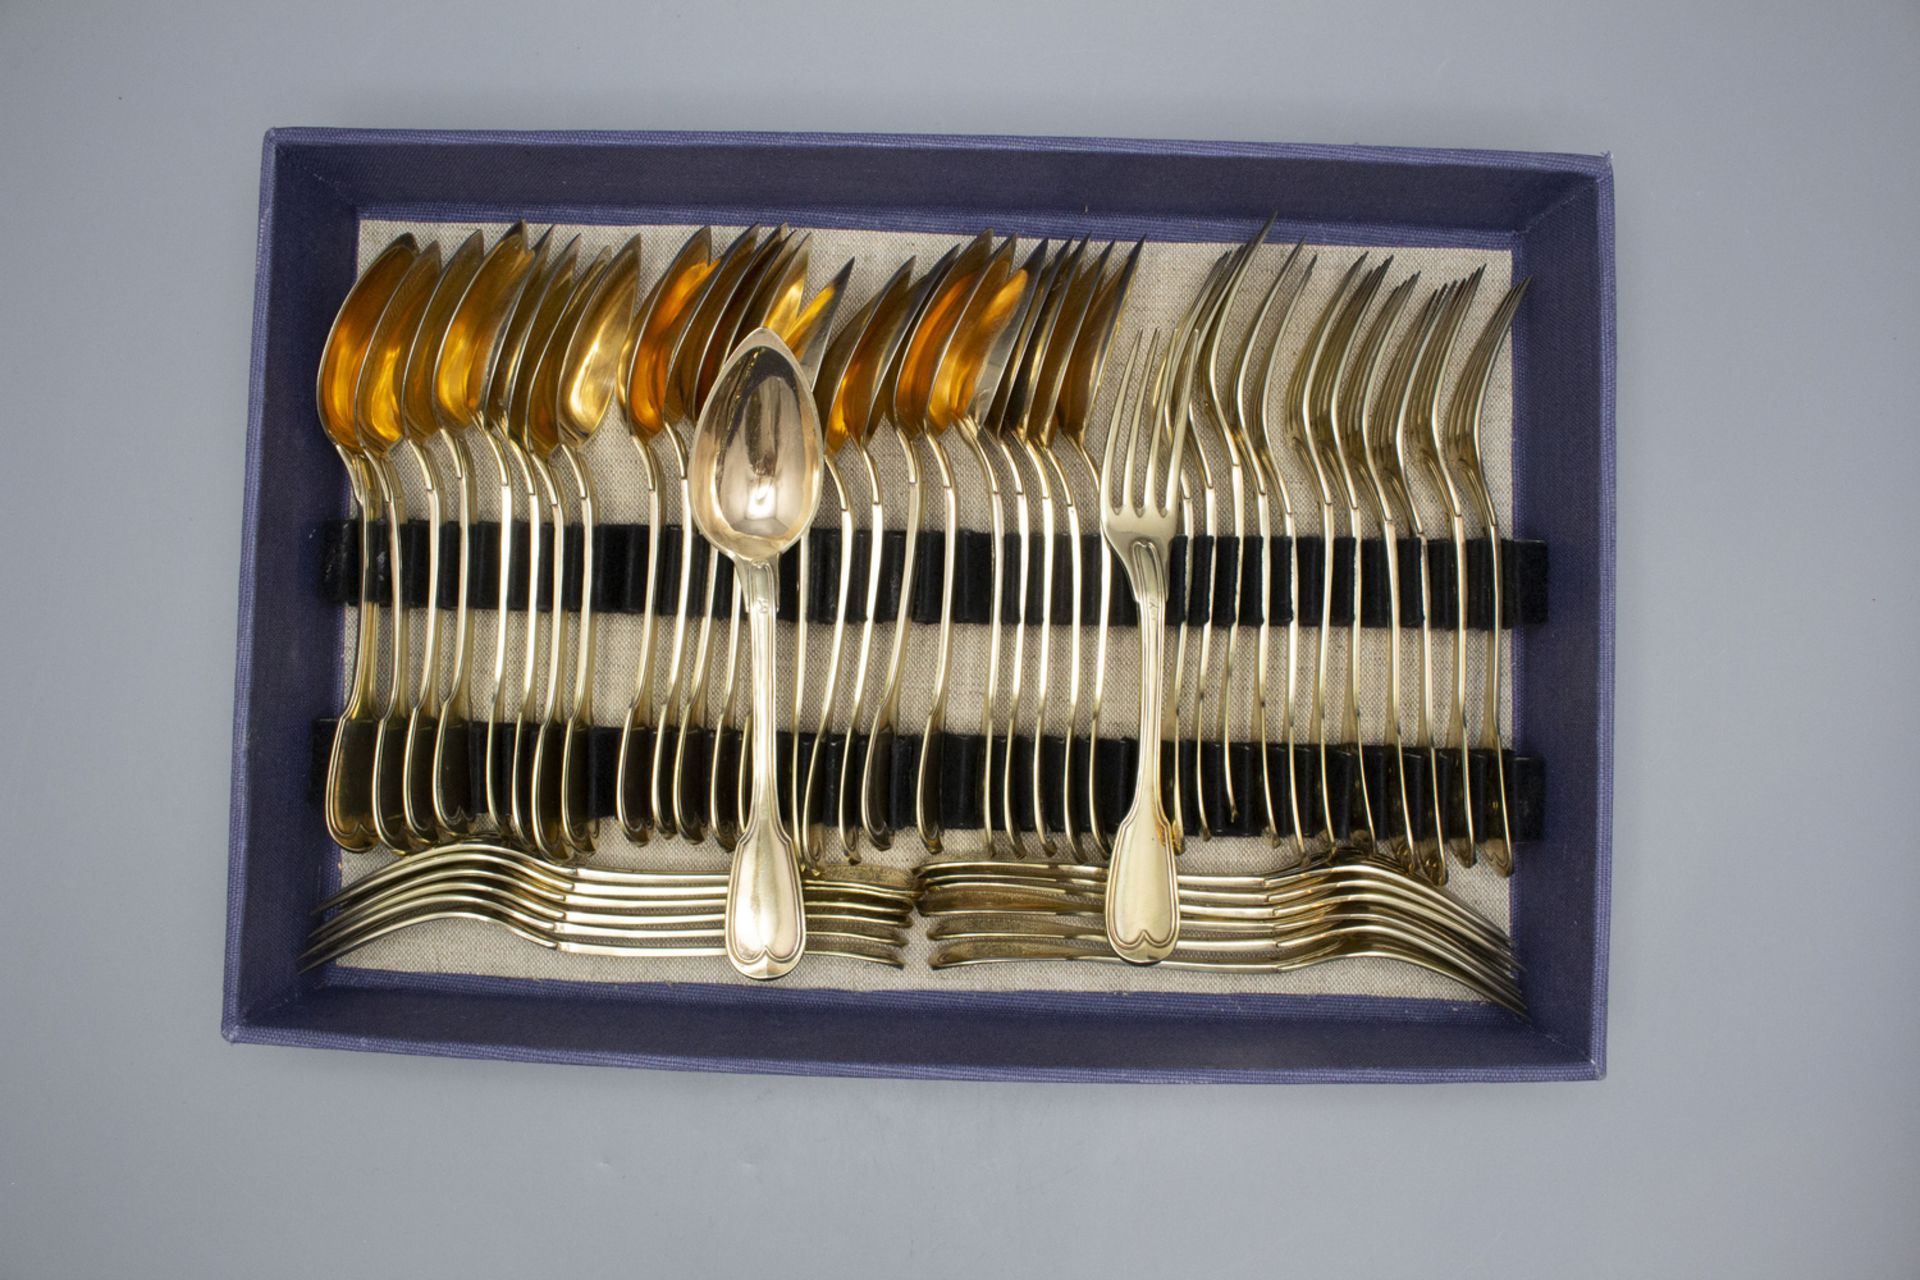 48-tlg. Silberbesteck / A set of 48 pieces silver cutlery, Charles Salomon Mahler, Paris, 1824-1833